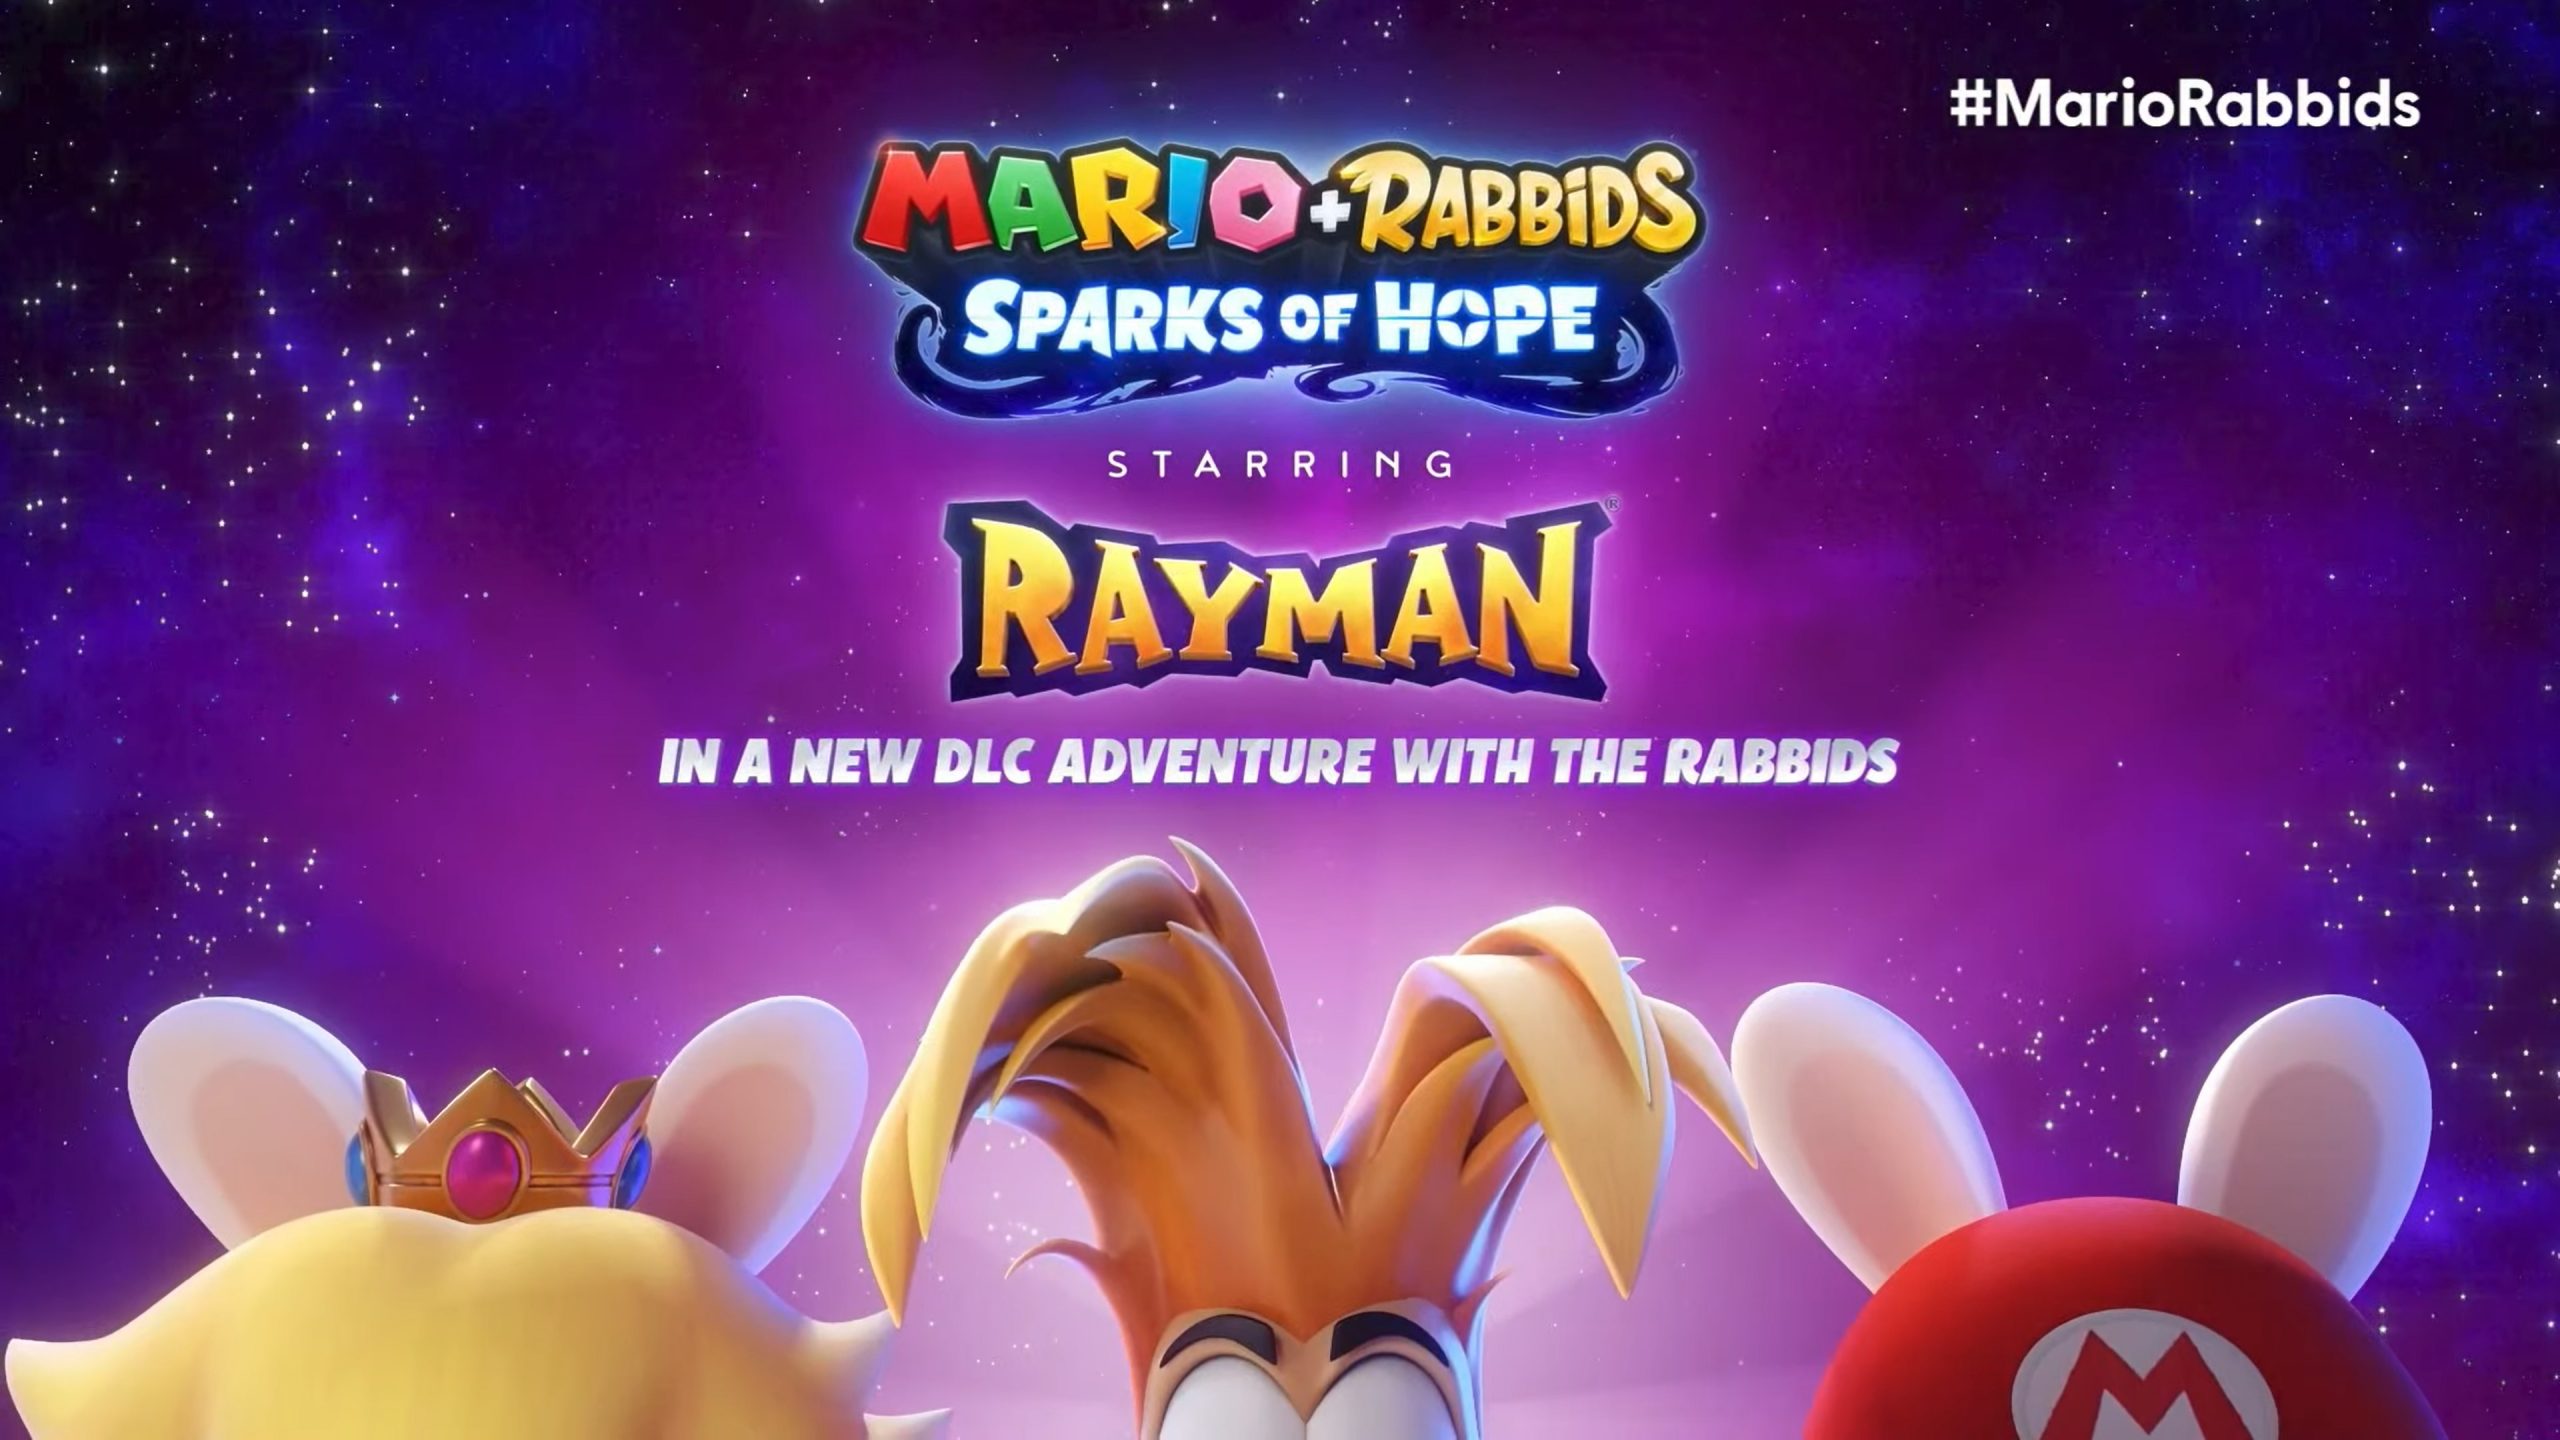 Mario-Rabbids-Sparks-of-Hope-Rayman-scaled.jpg